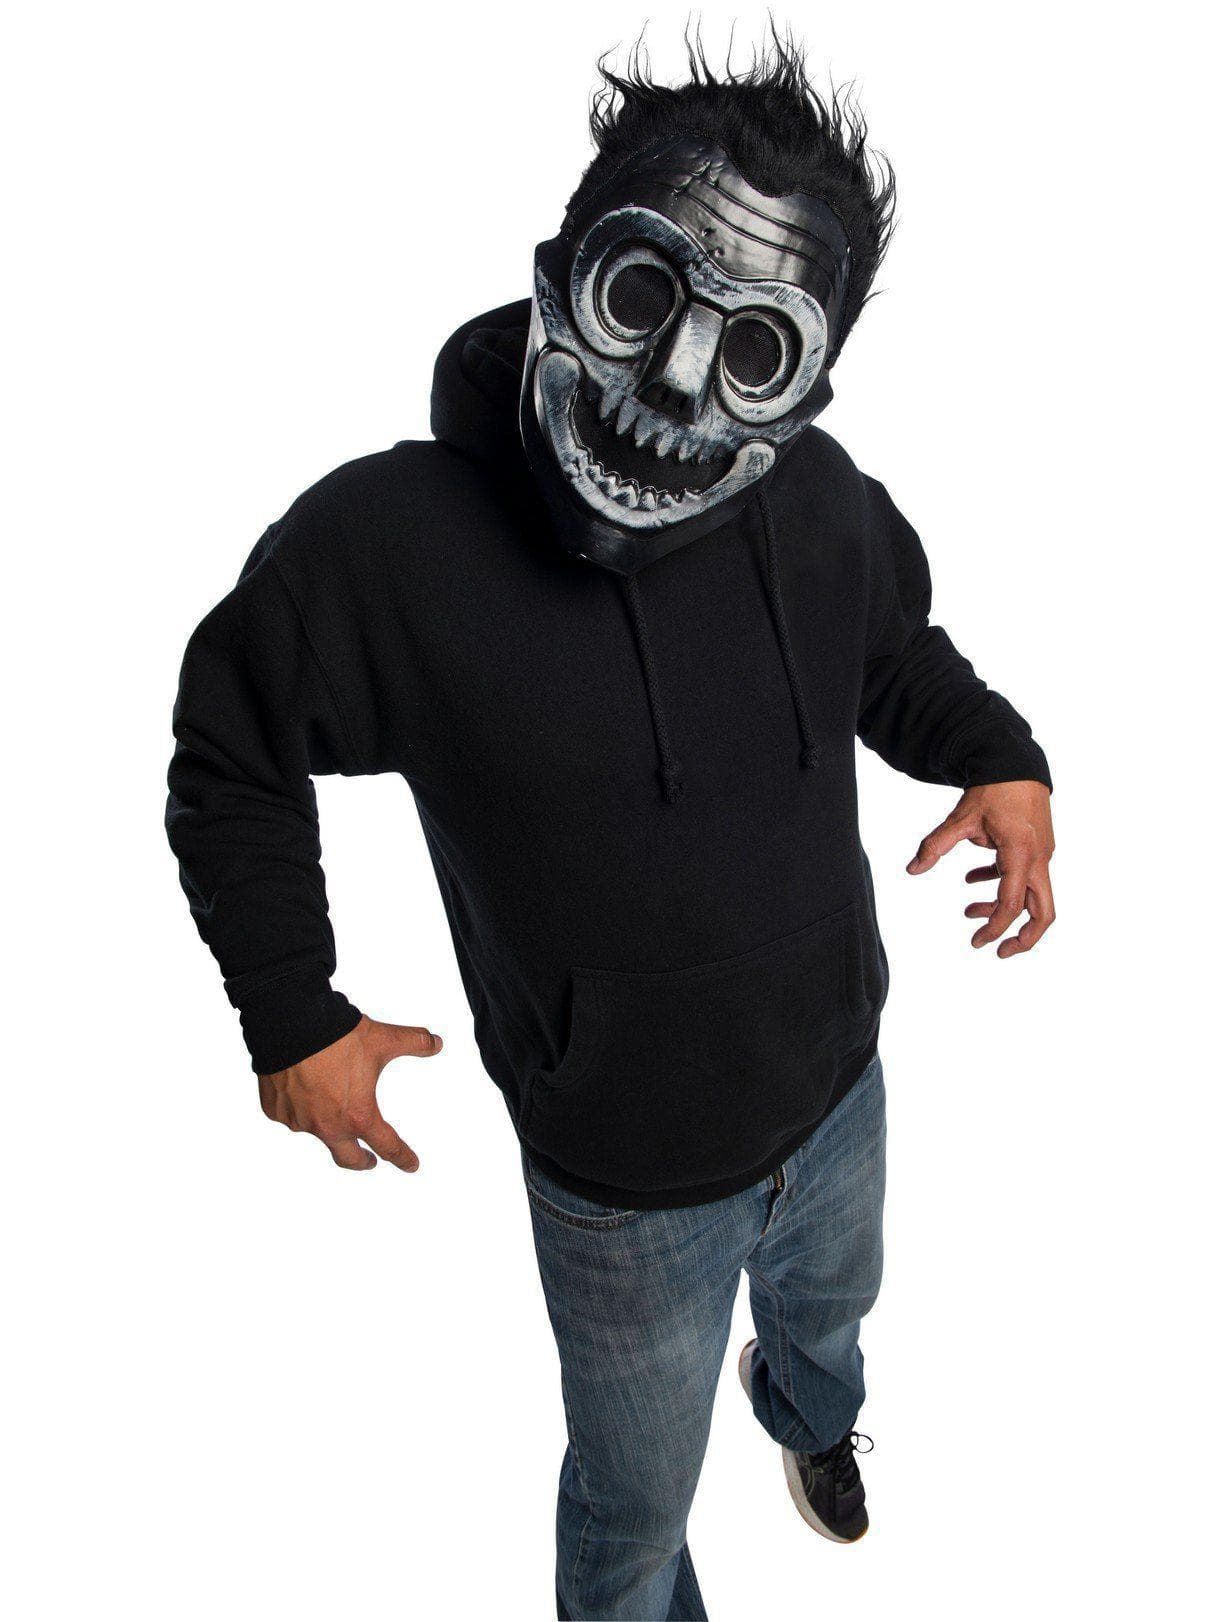 Shadow Creeper Mask - costumes.com